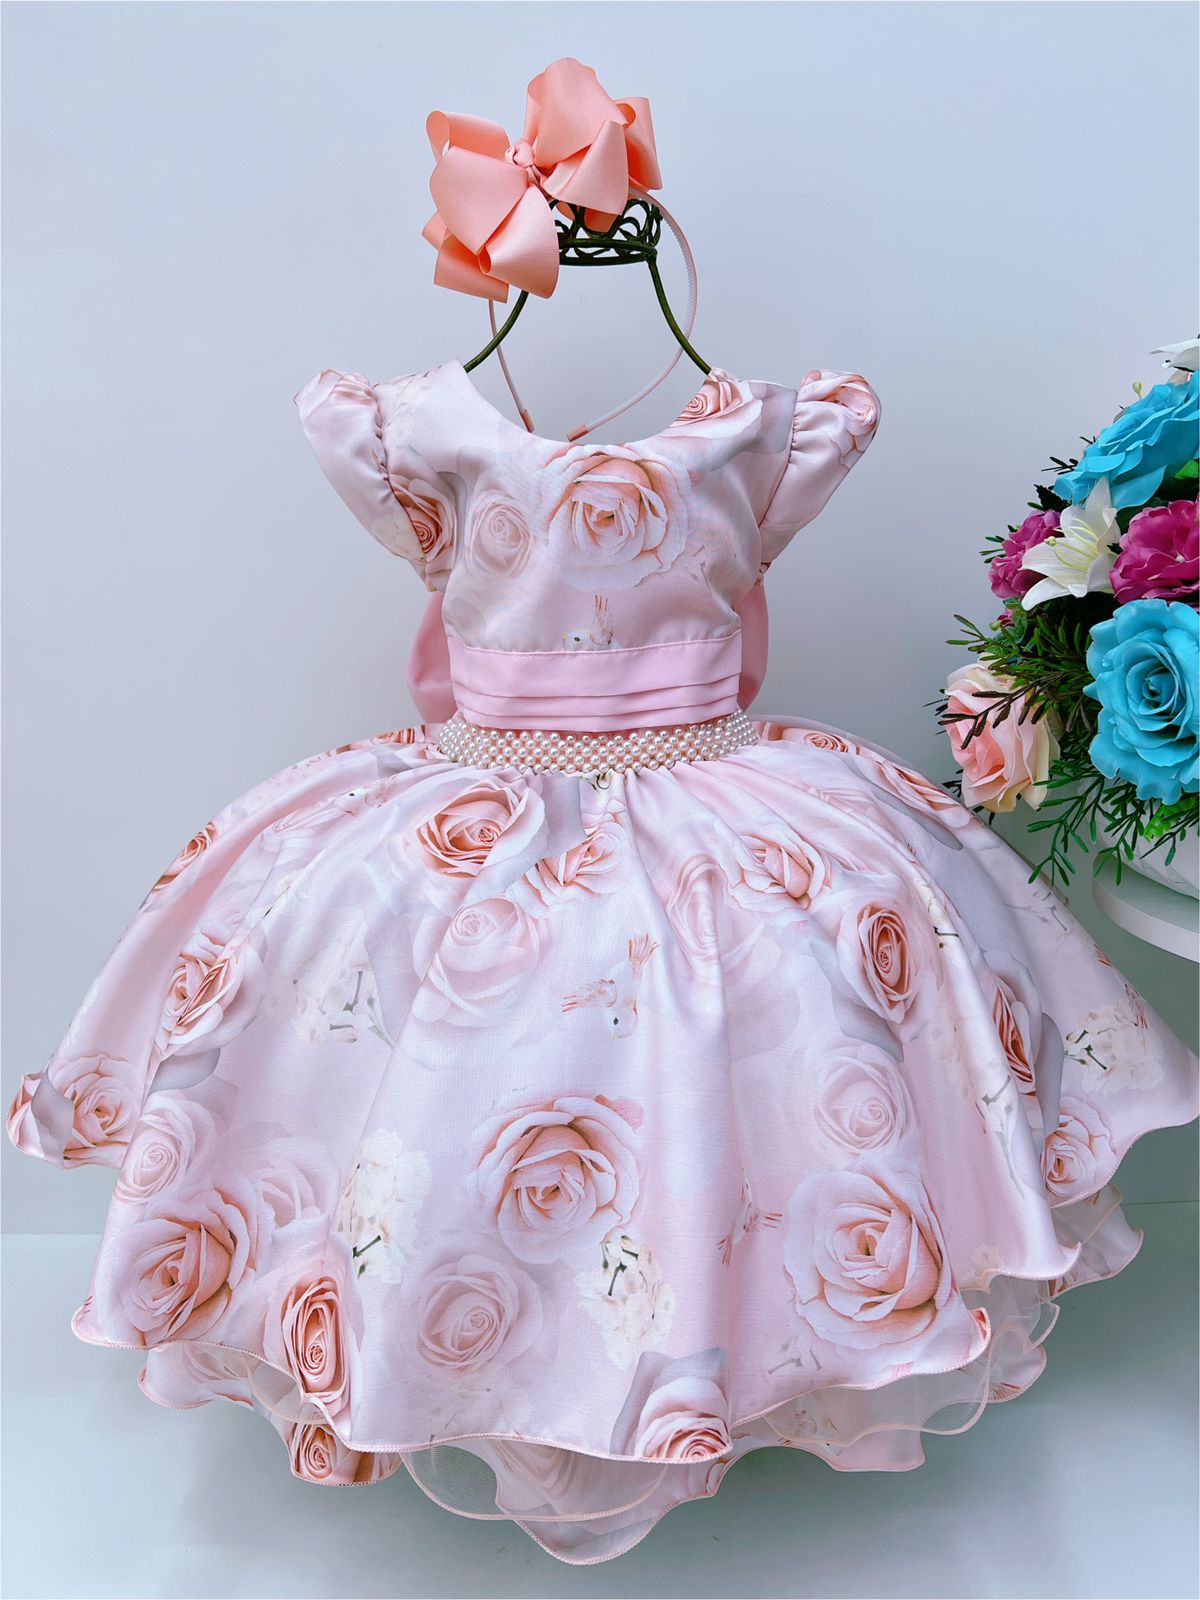 Vestido Infantil Rosa Florido C/ Cinto Pérolas Luxo